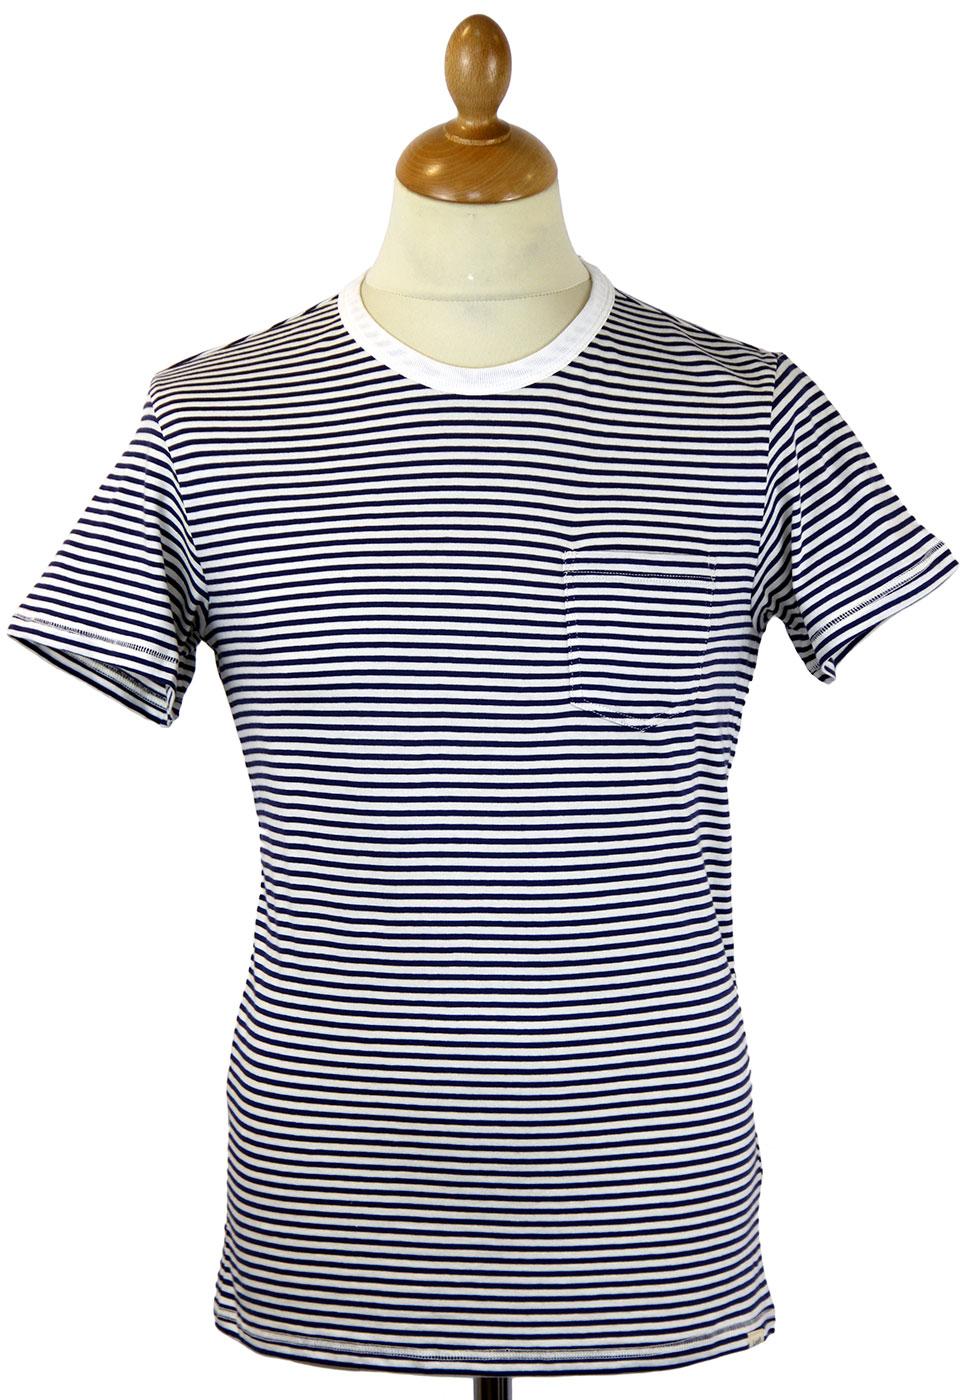 LEE JEANS Retro Indie Mod Stripe Crew Neck Pocket T-shirt Blue